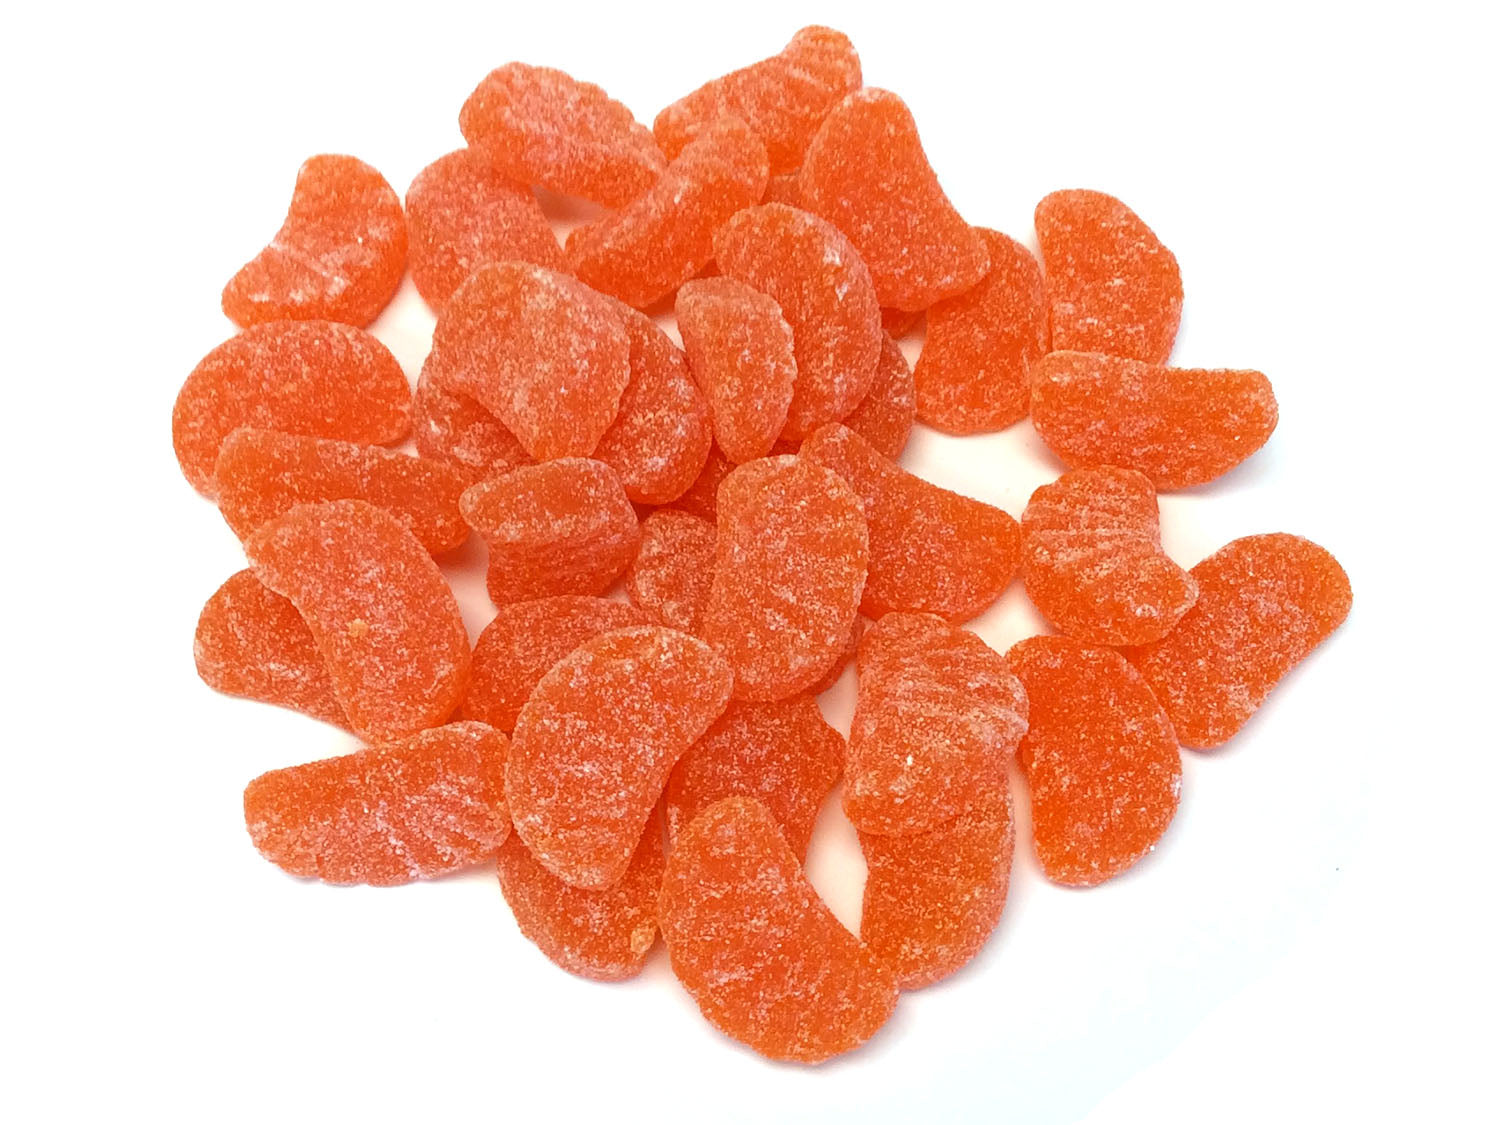 Orange Slices - Bulk 3 lb bag (90 ct)